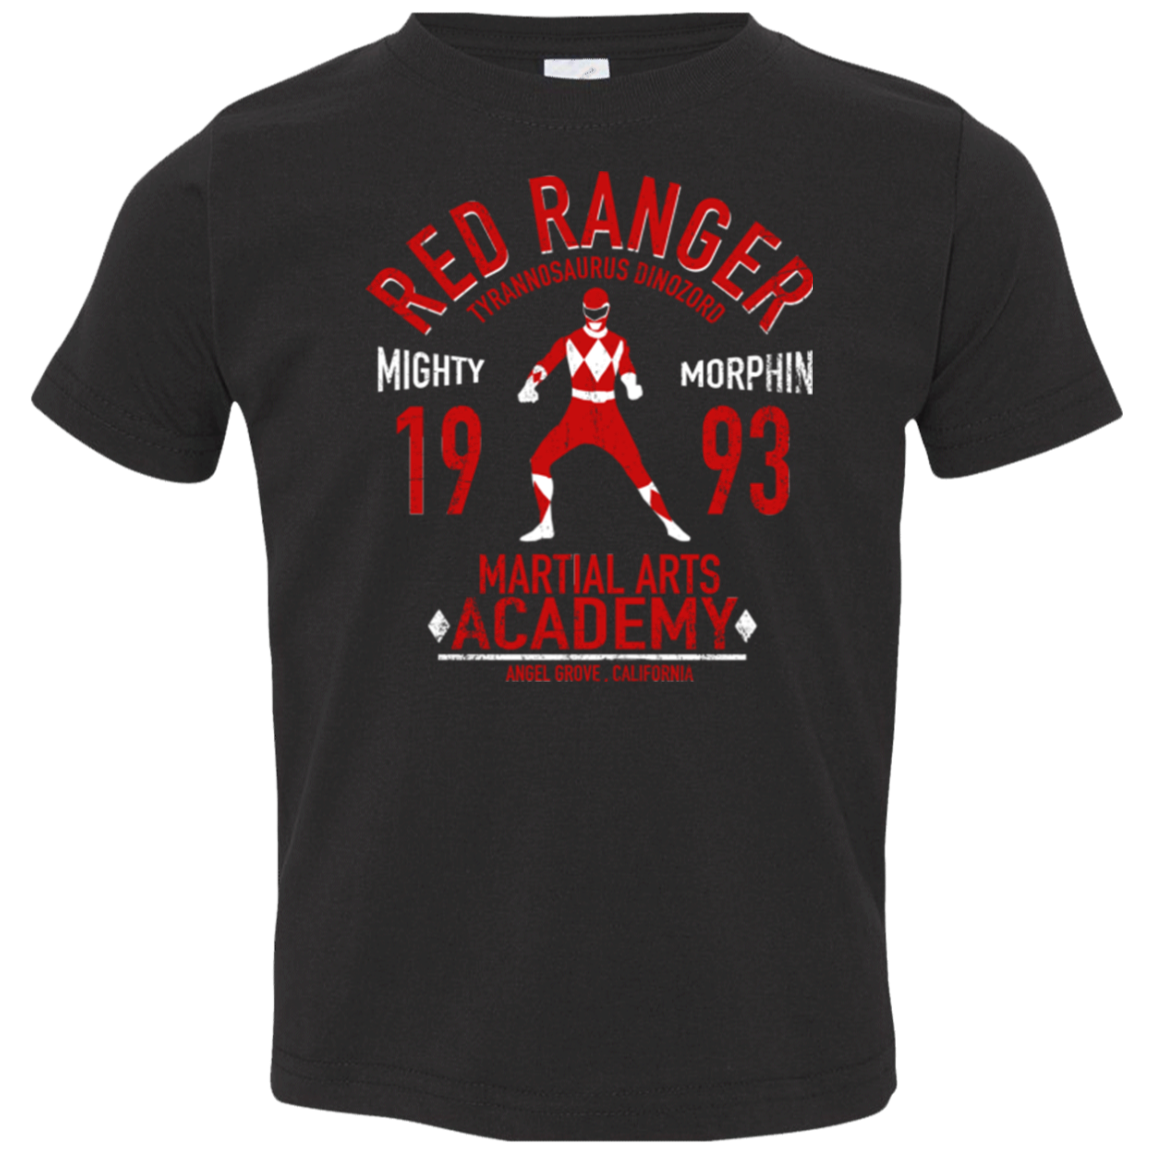 Tyrannosaurus Ranger (1) Toddler Premium T-Shirt